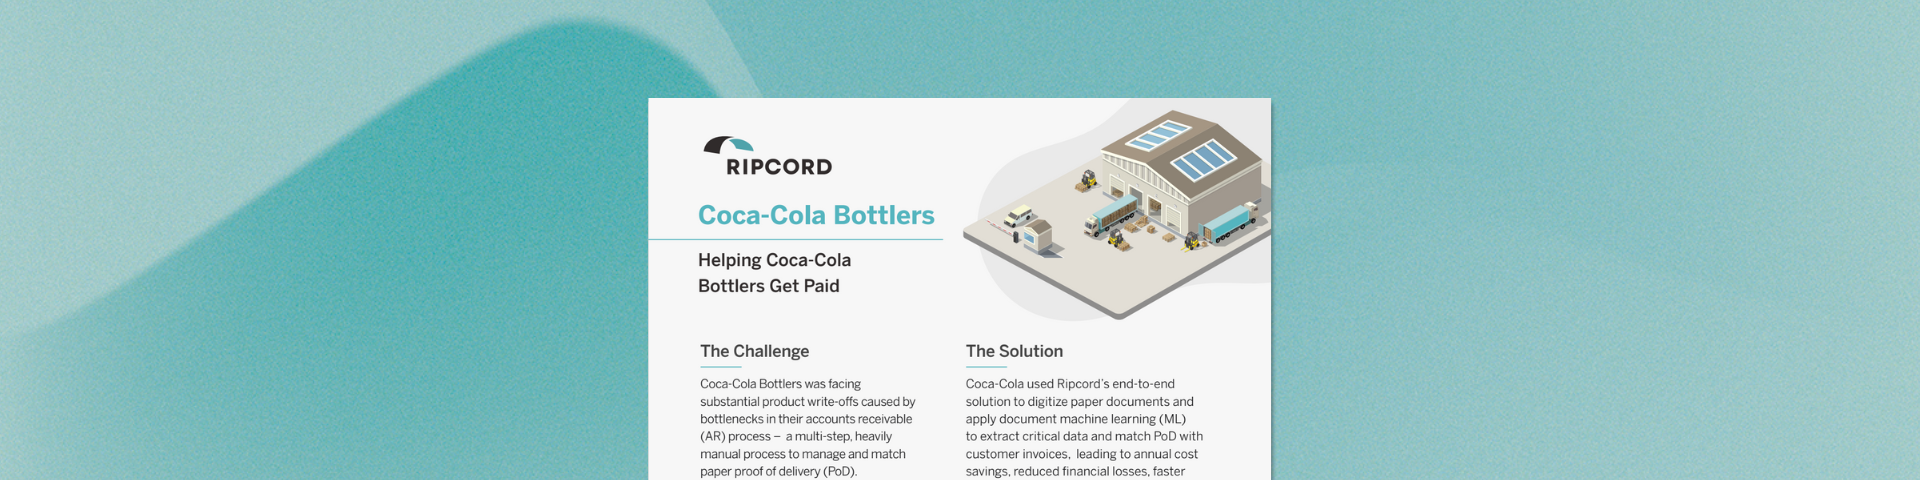 Coca-Cola Bottlers Case Study - Ripcord